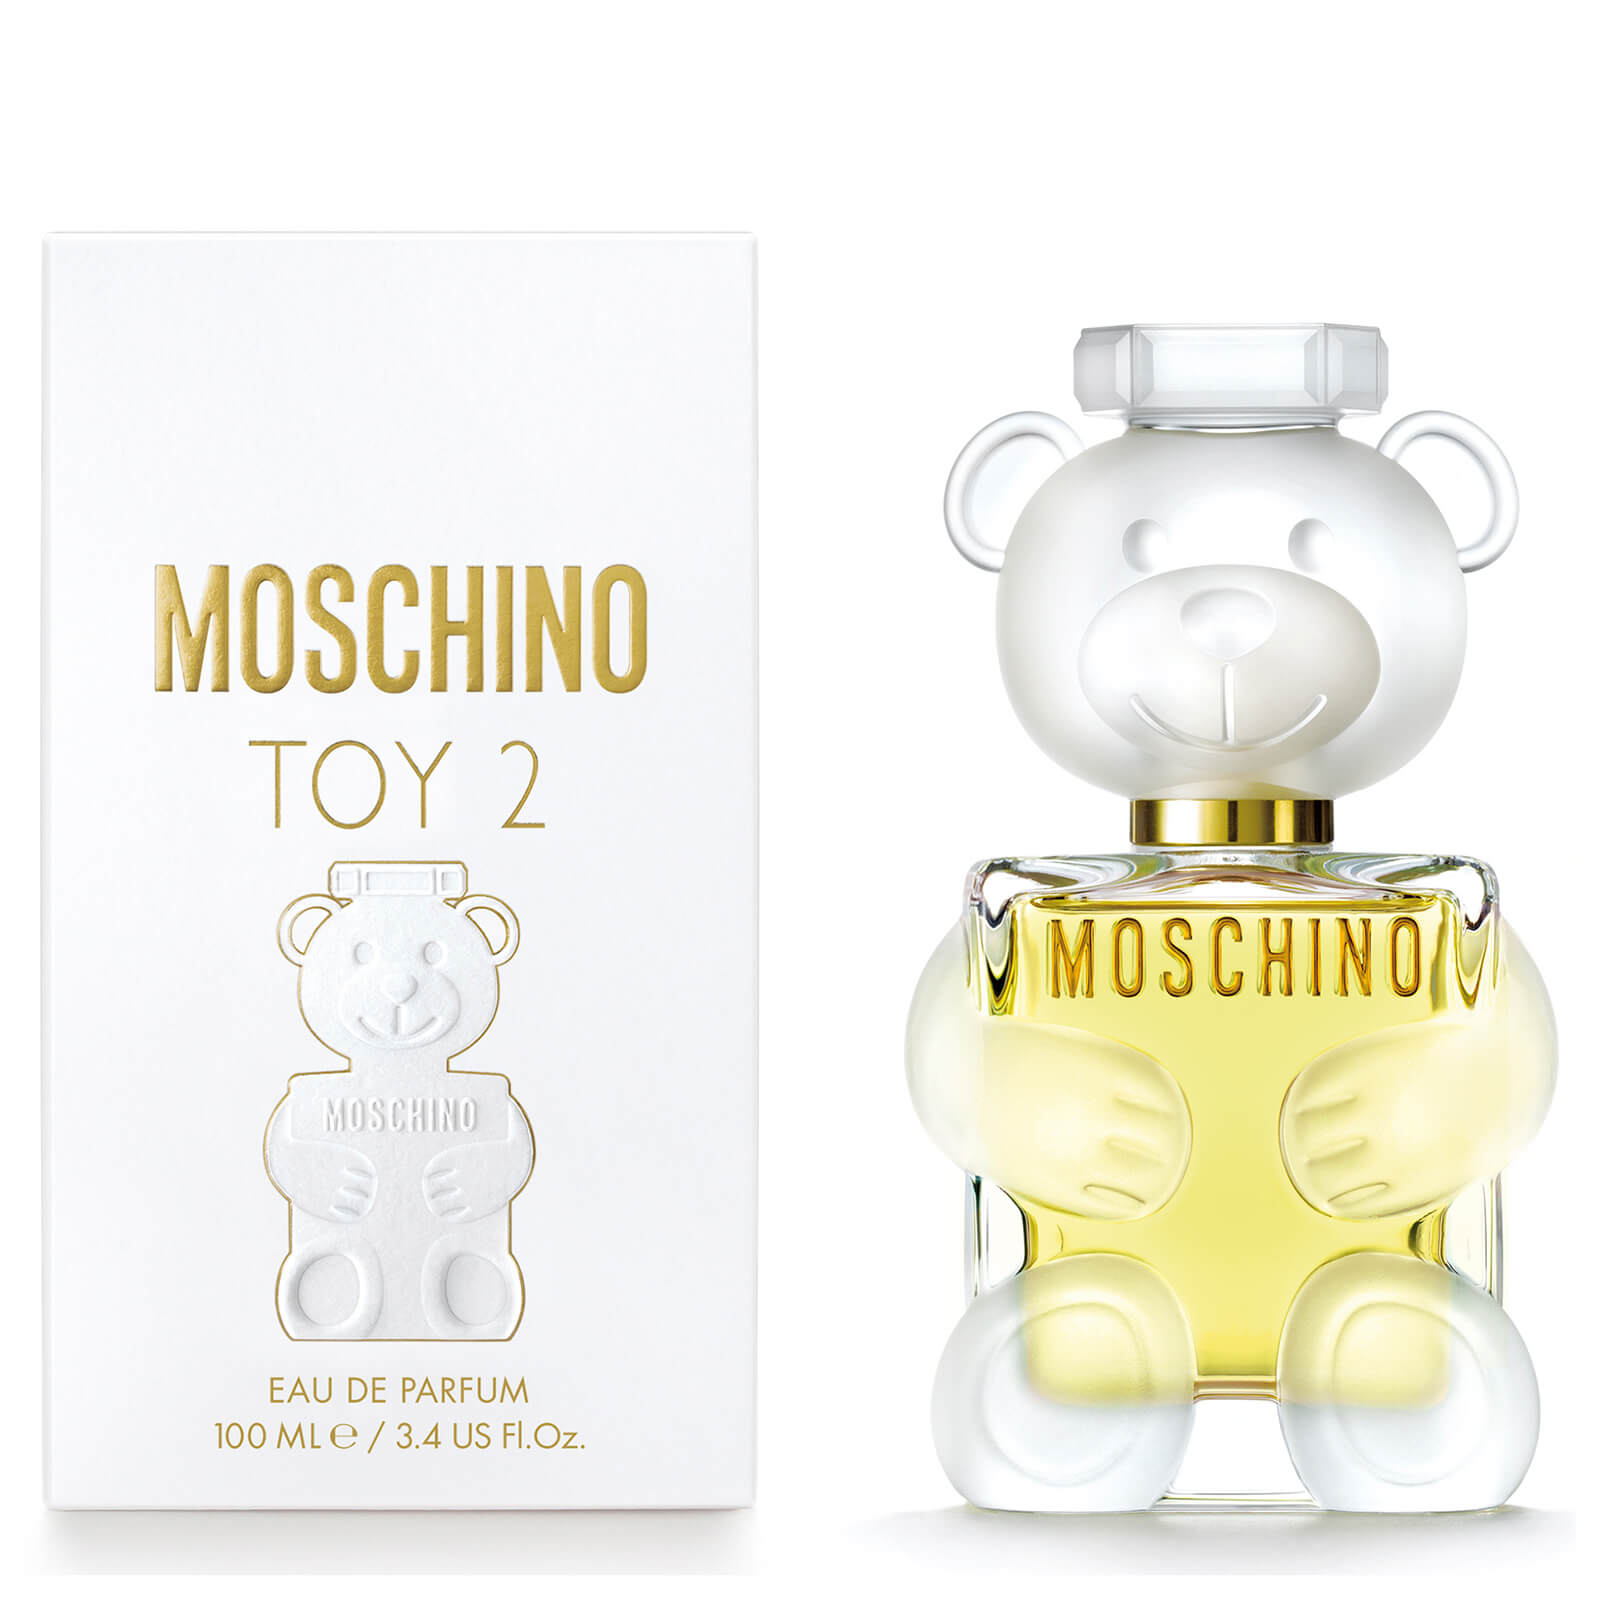 à¸à¸¥à¸à¸²à¸£à¸à¹à¸à¸«à¸²à¸£à¸¹à¸à¸à¸²à¸à¸ªà¸³à¸«à¸£à¸±à¸ Moschino Toy 2 Eau de Parfum